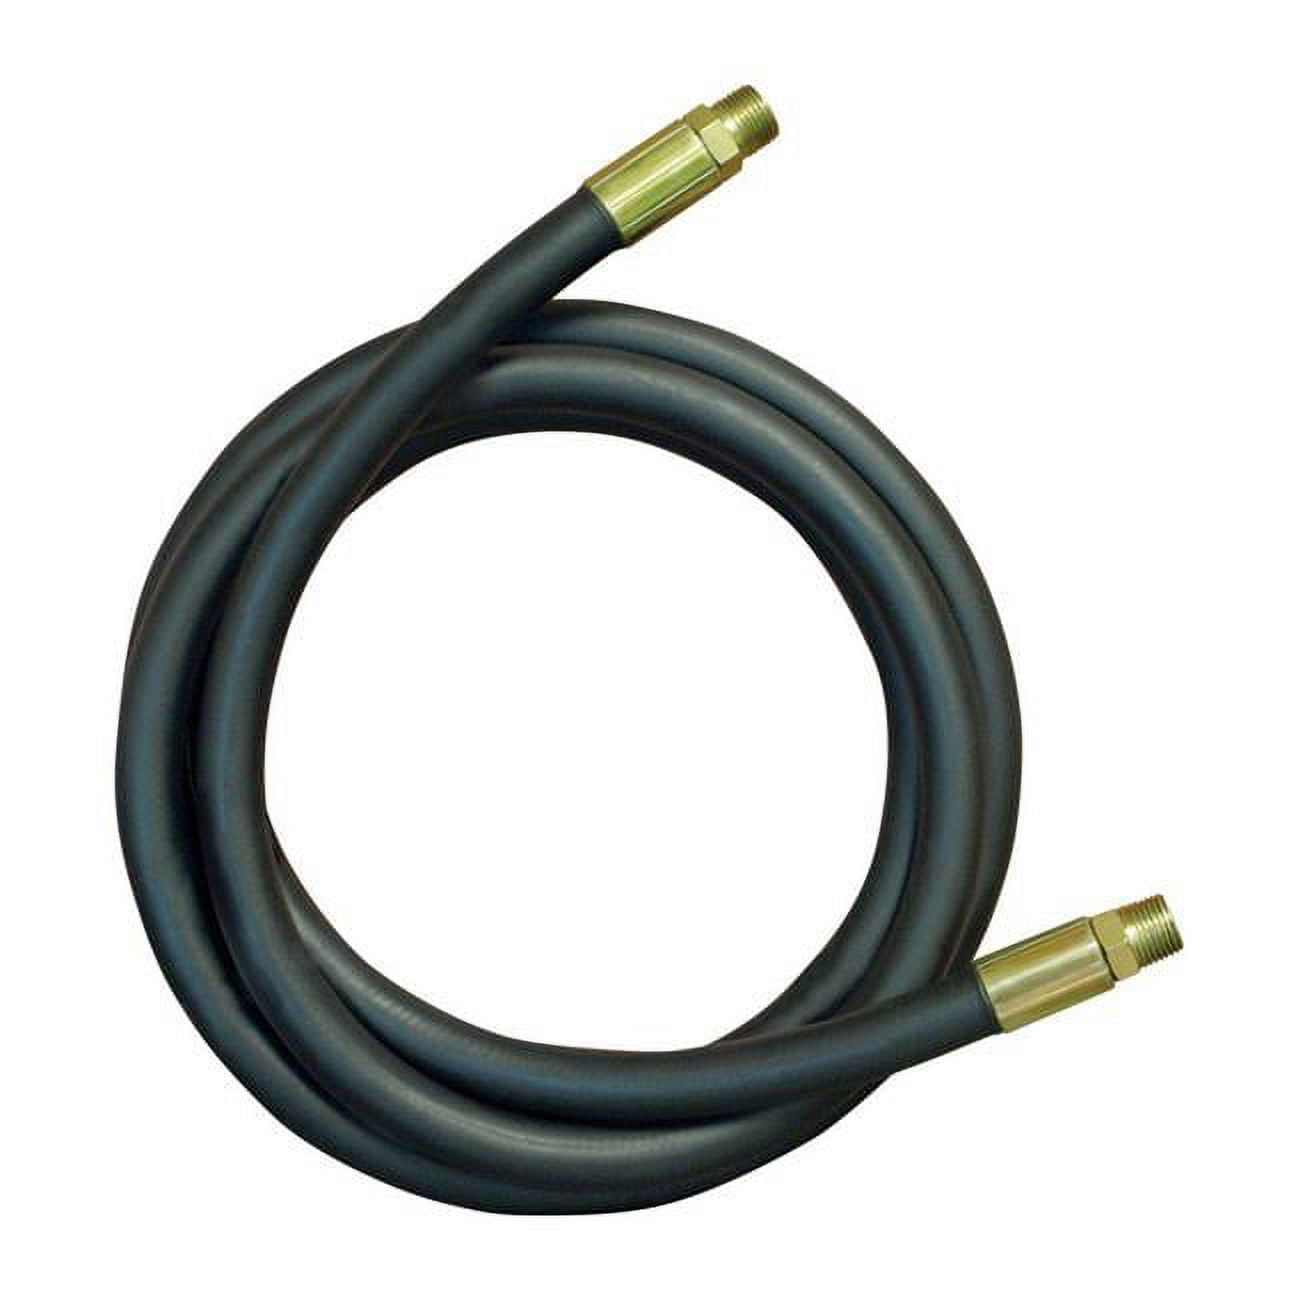 7405897 48 In. X 0.5 In. Dia. Universal 2-wire Hydraulic Hose - Black Rubber